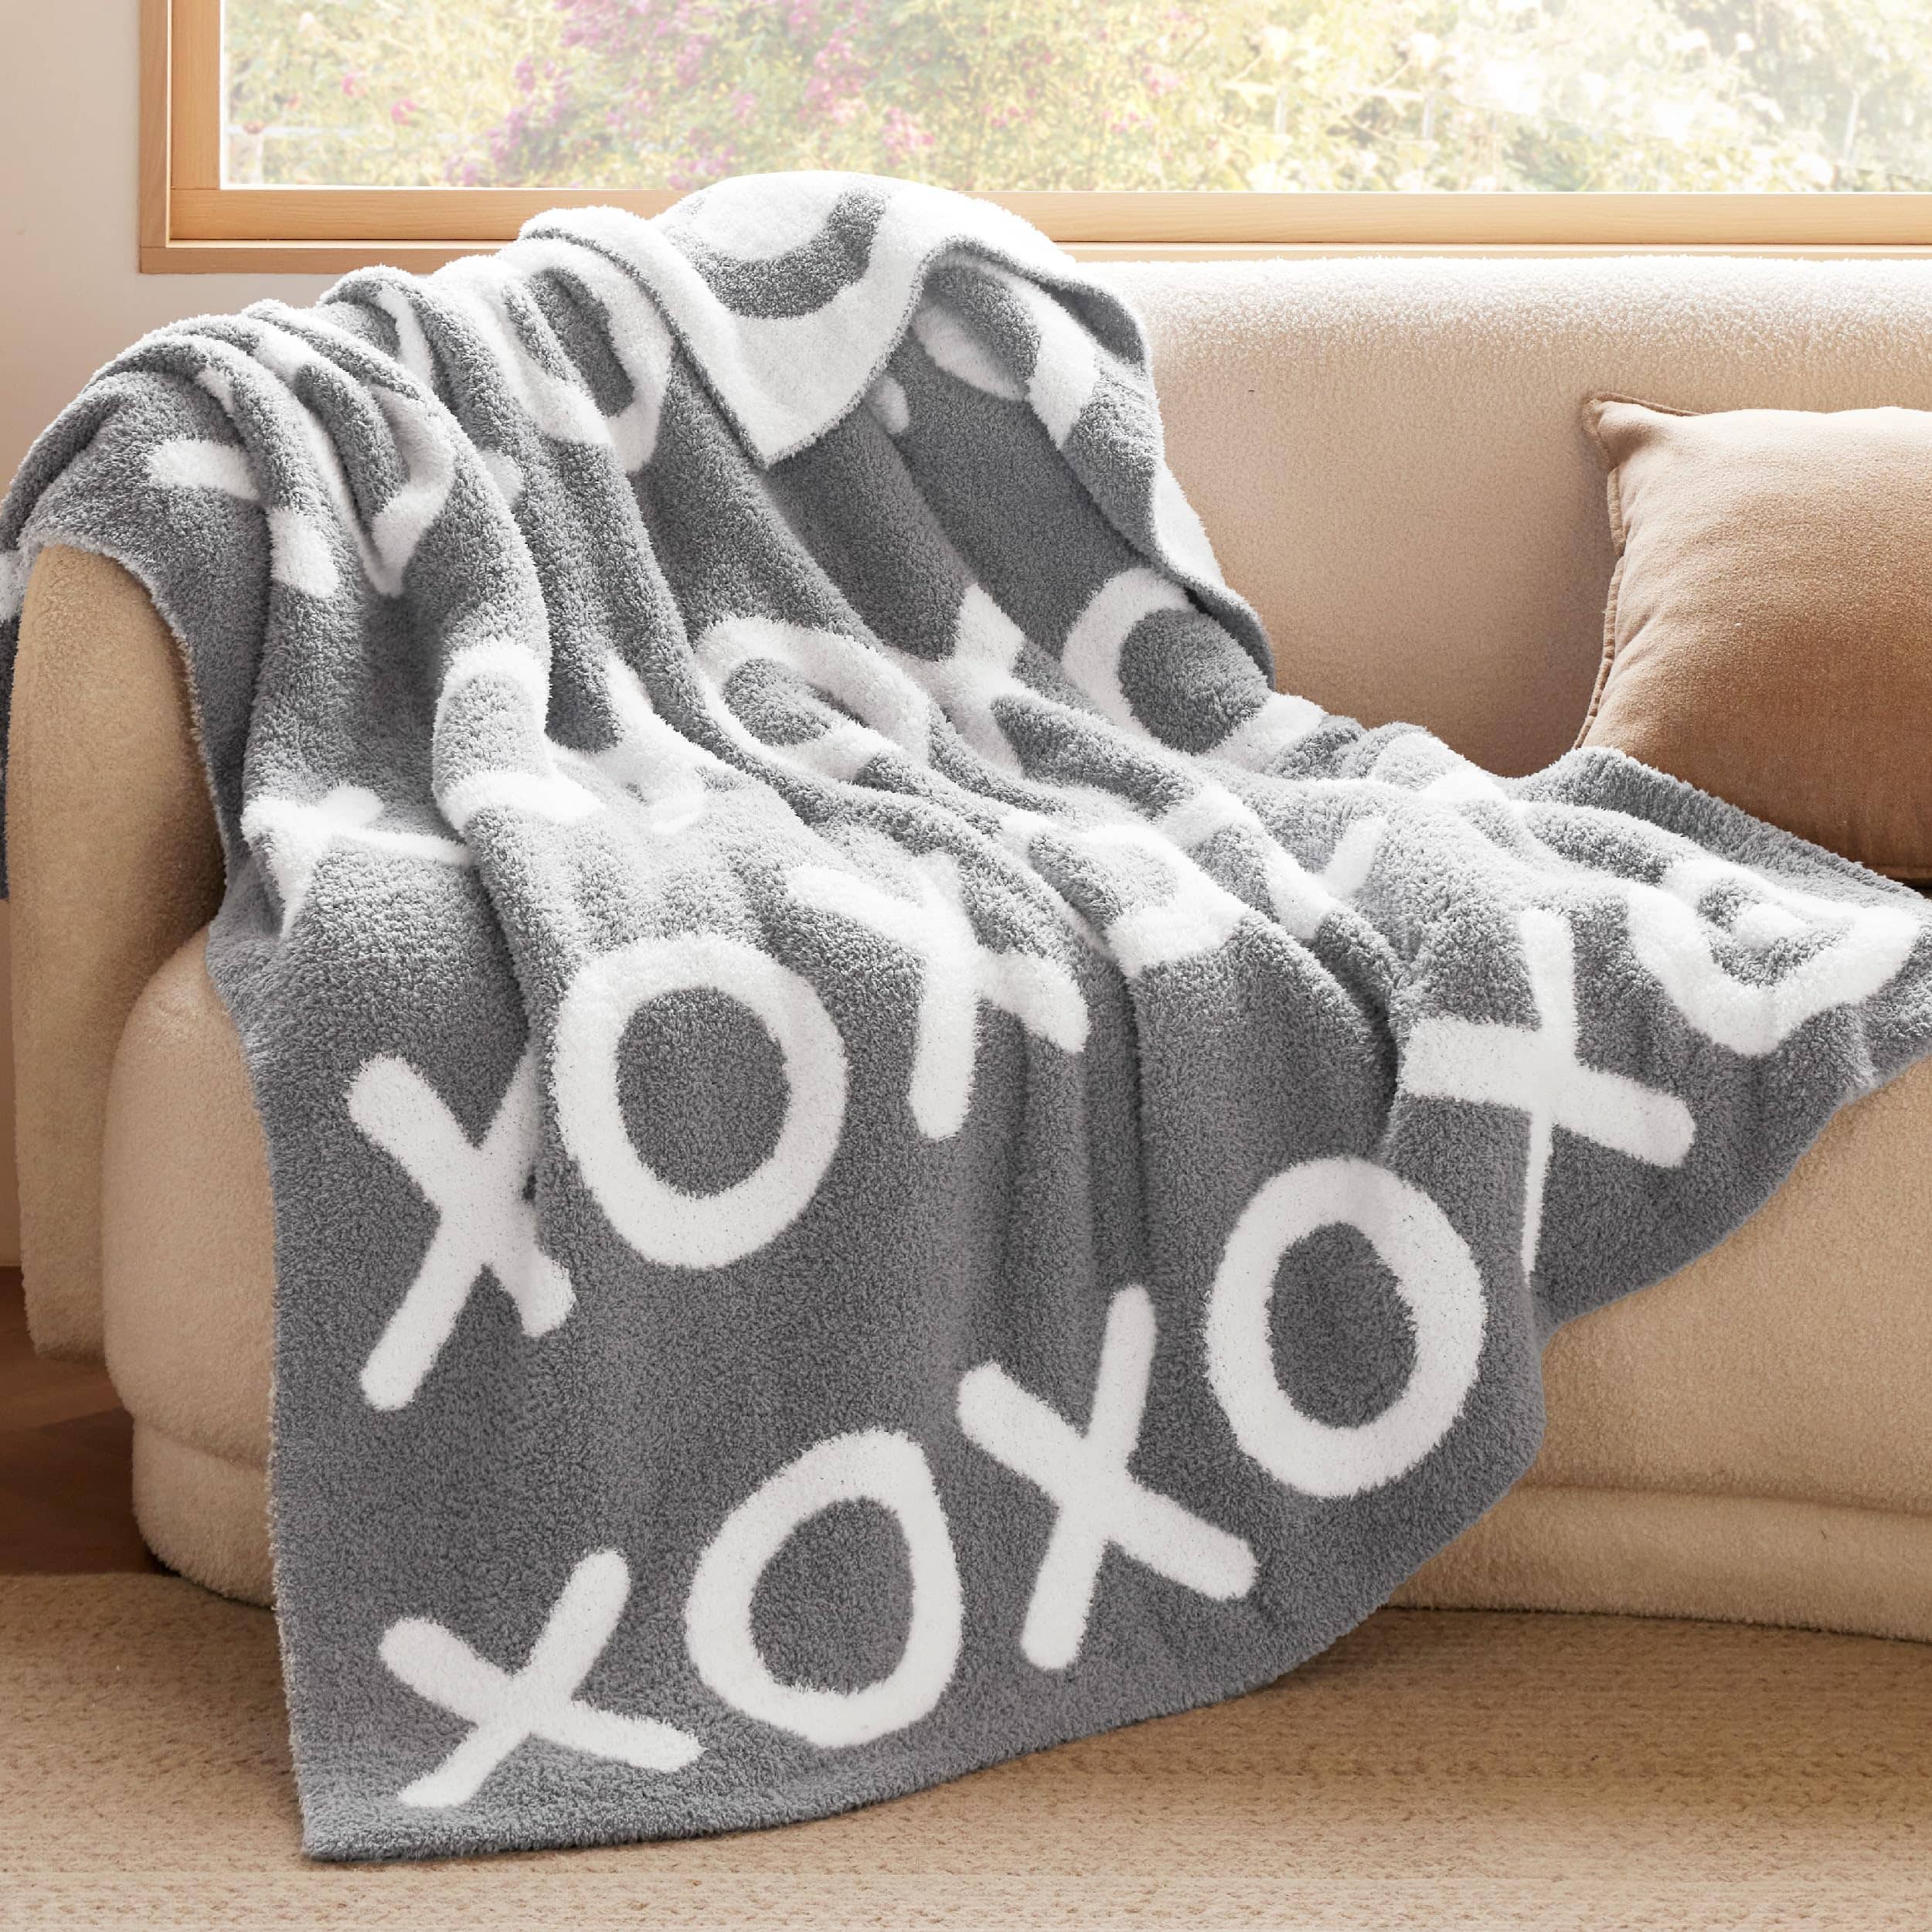 Bedsure Fluffy Xoxo Valentine's Day Throw Blanket